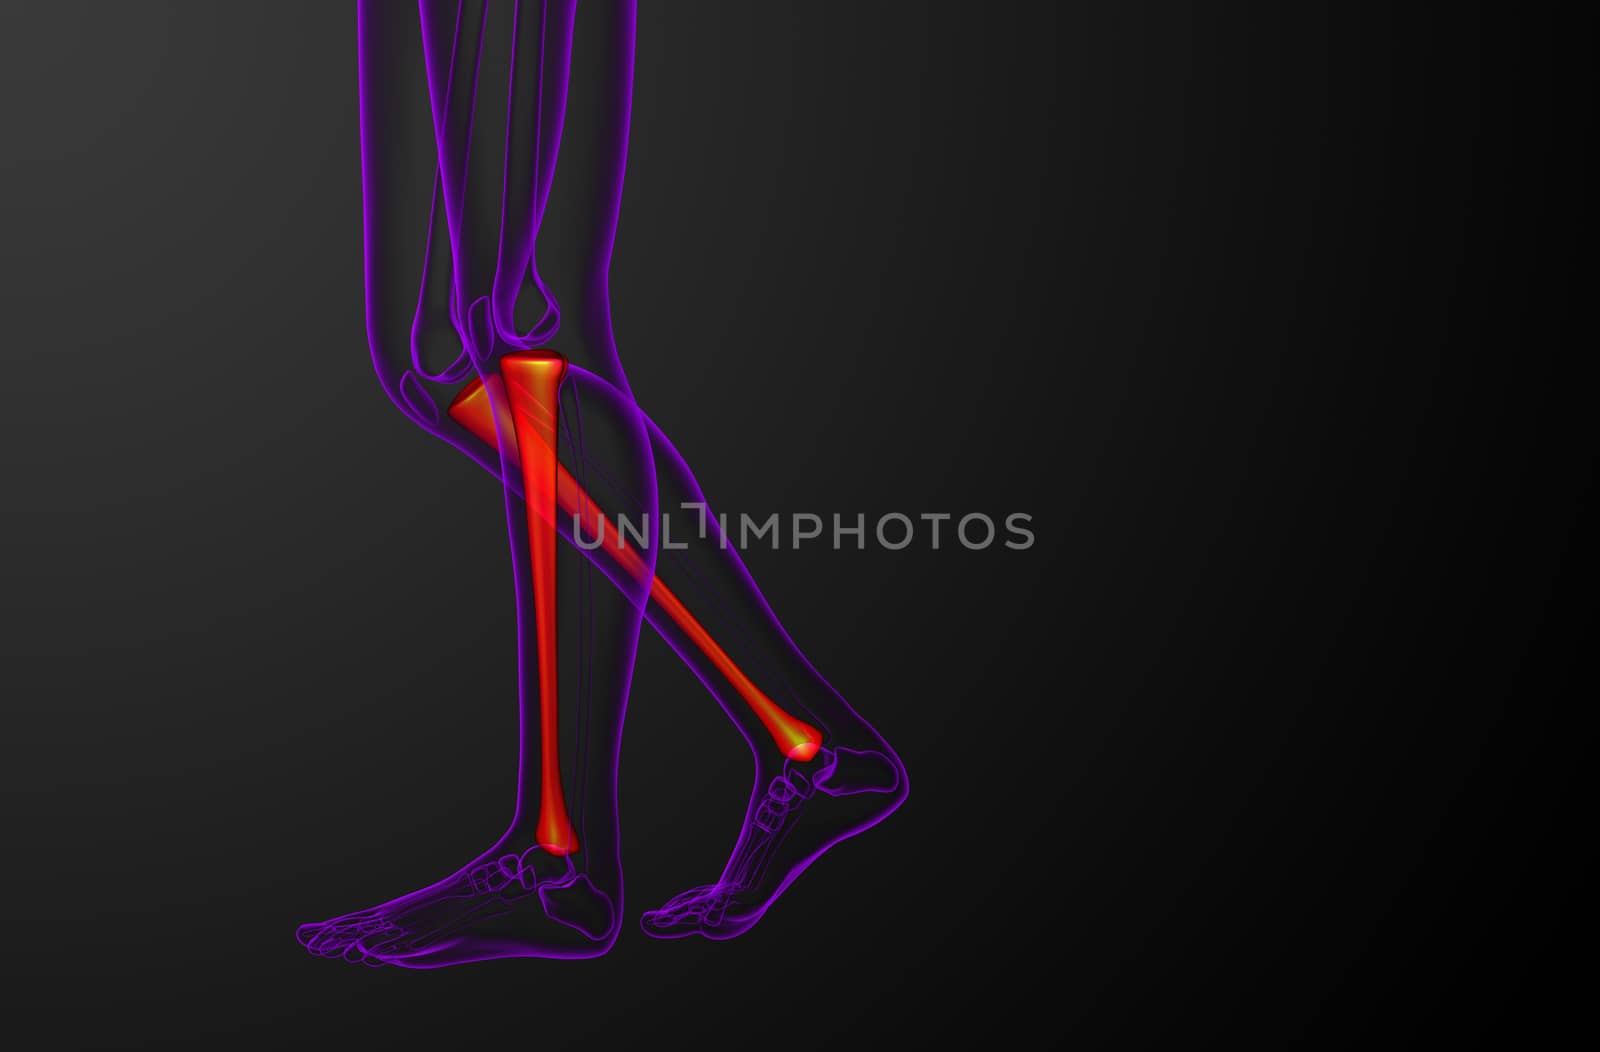 3d render medical illustration of the tibia bone  by maya2008